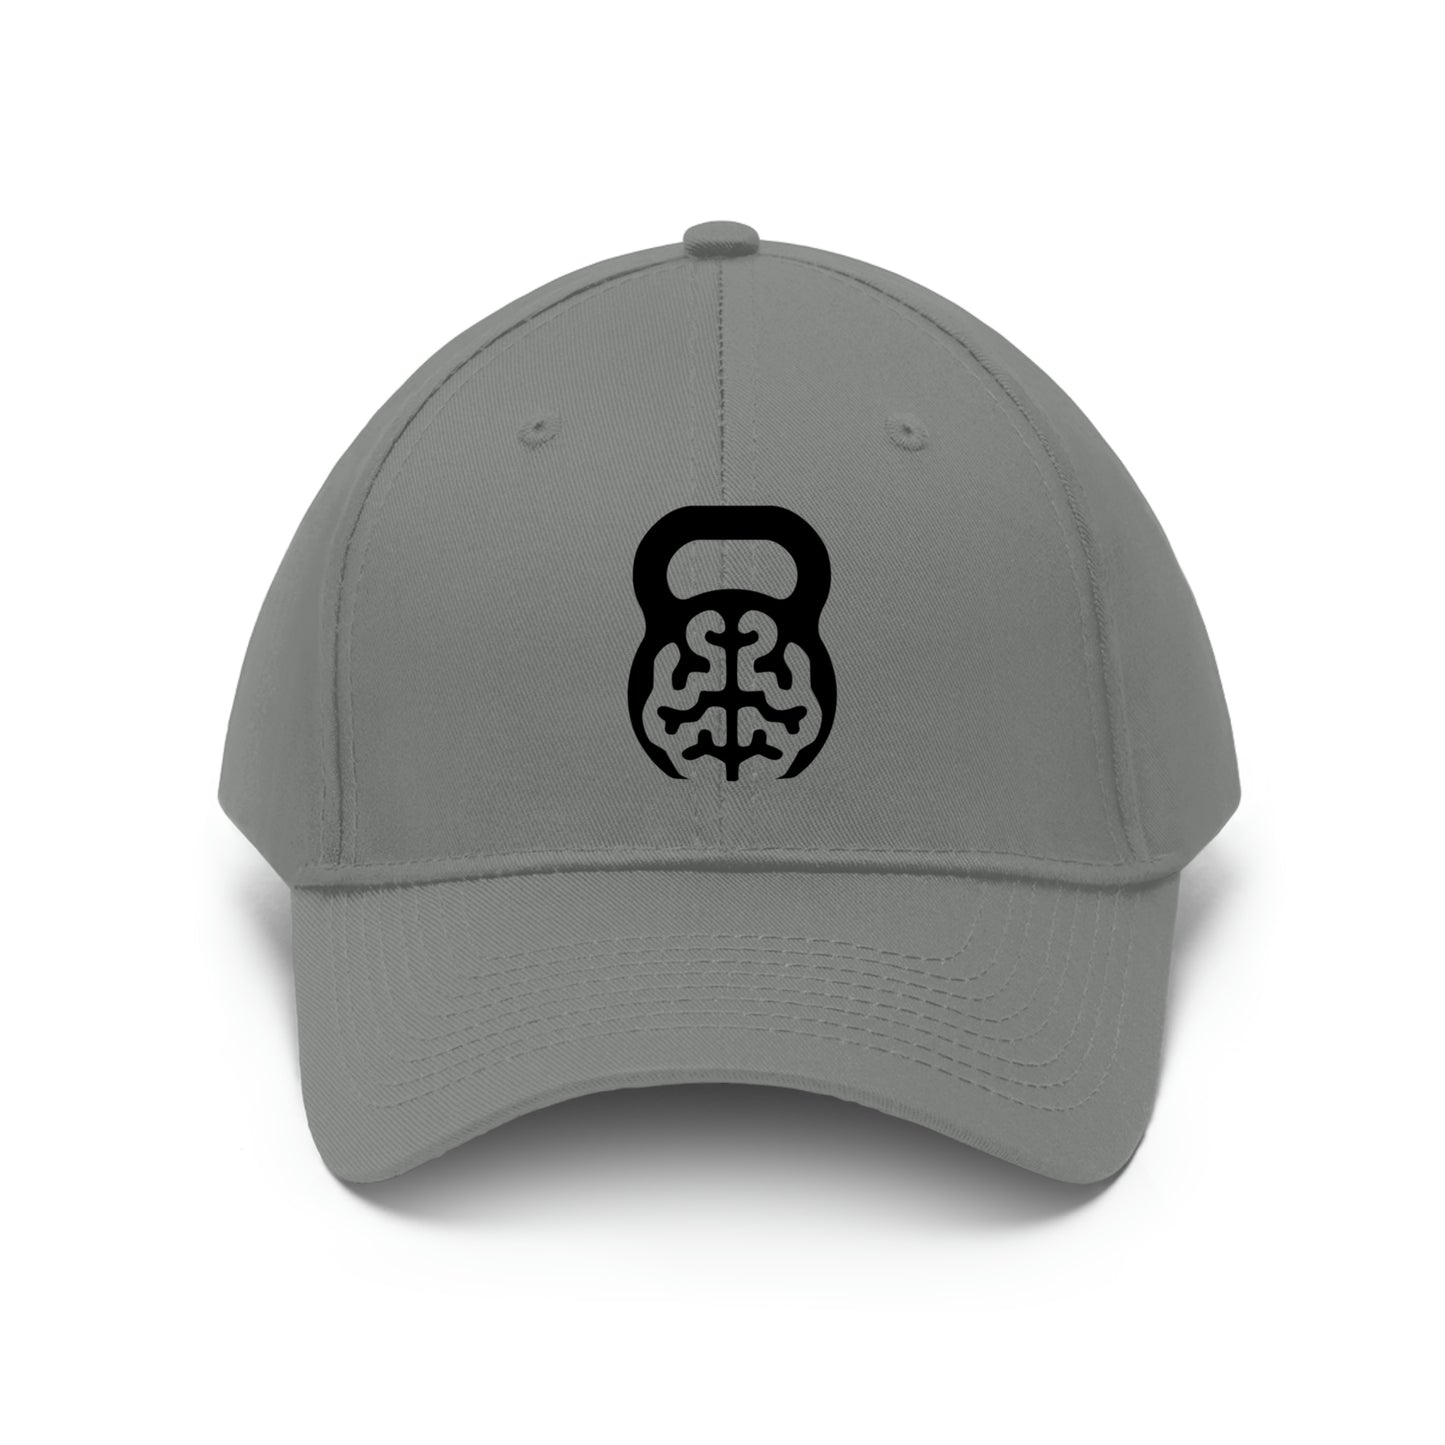 IDology Embroidered Unisex Twill Hat